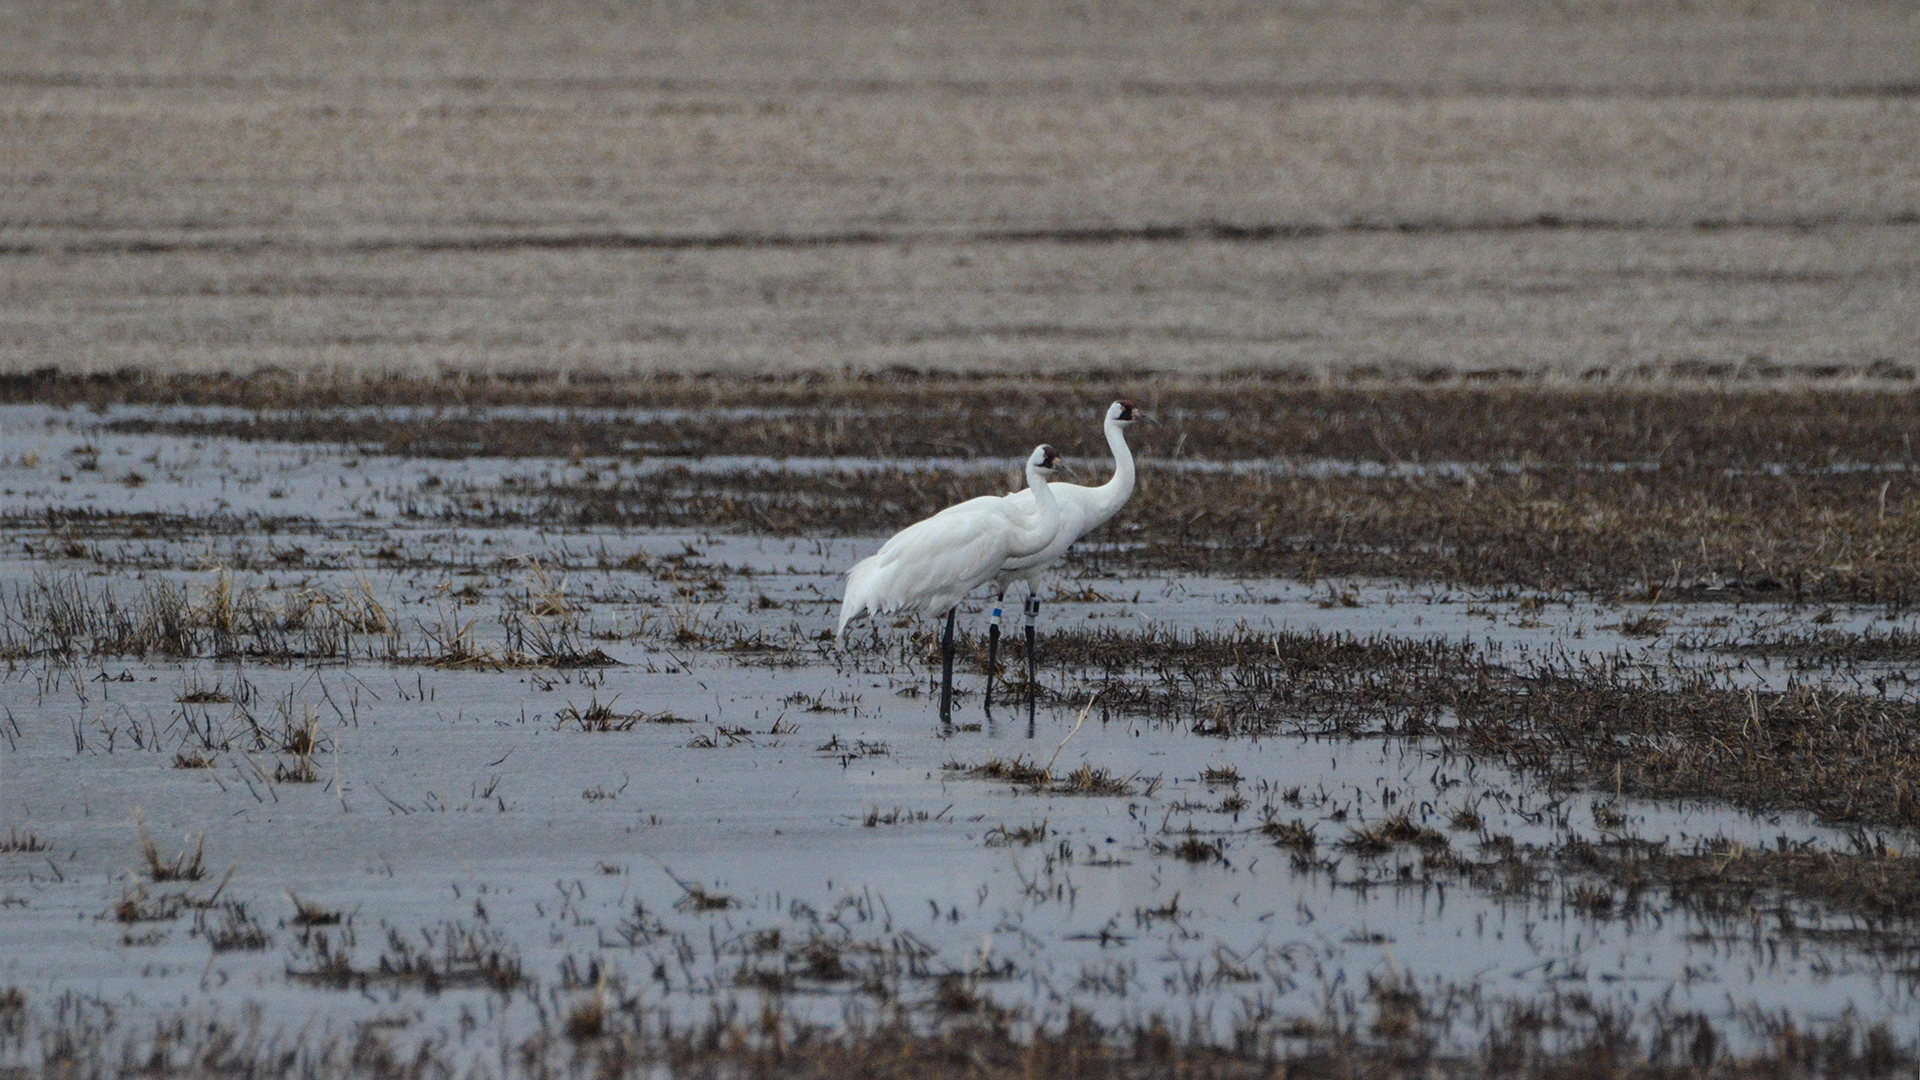 Whooping Cranes wade in wetlands water